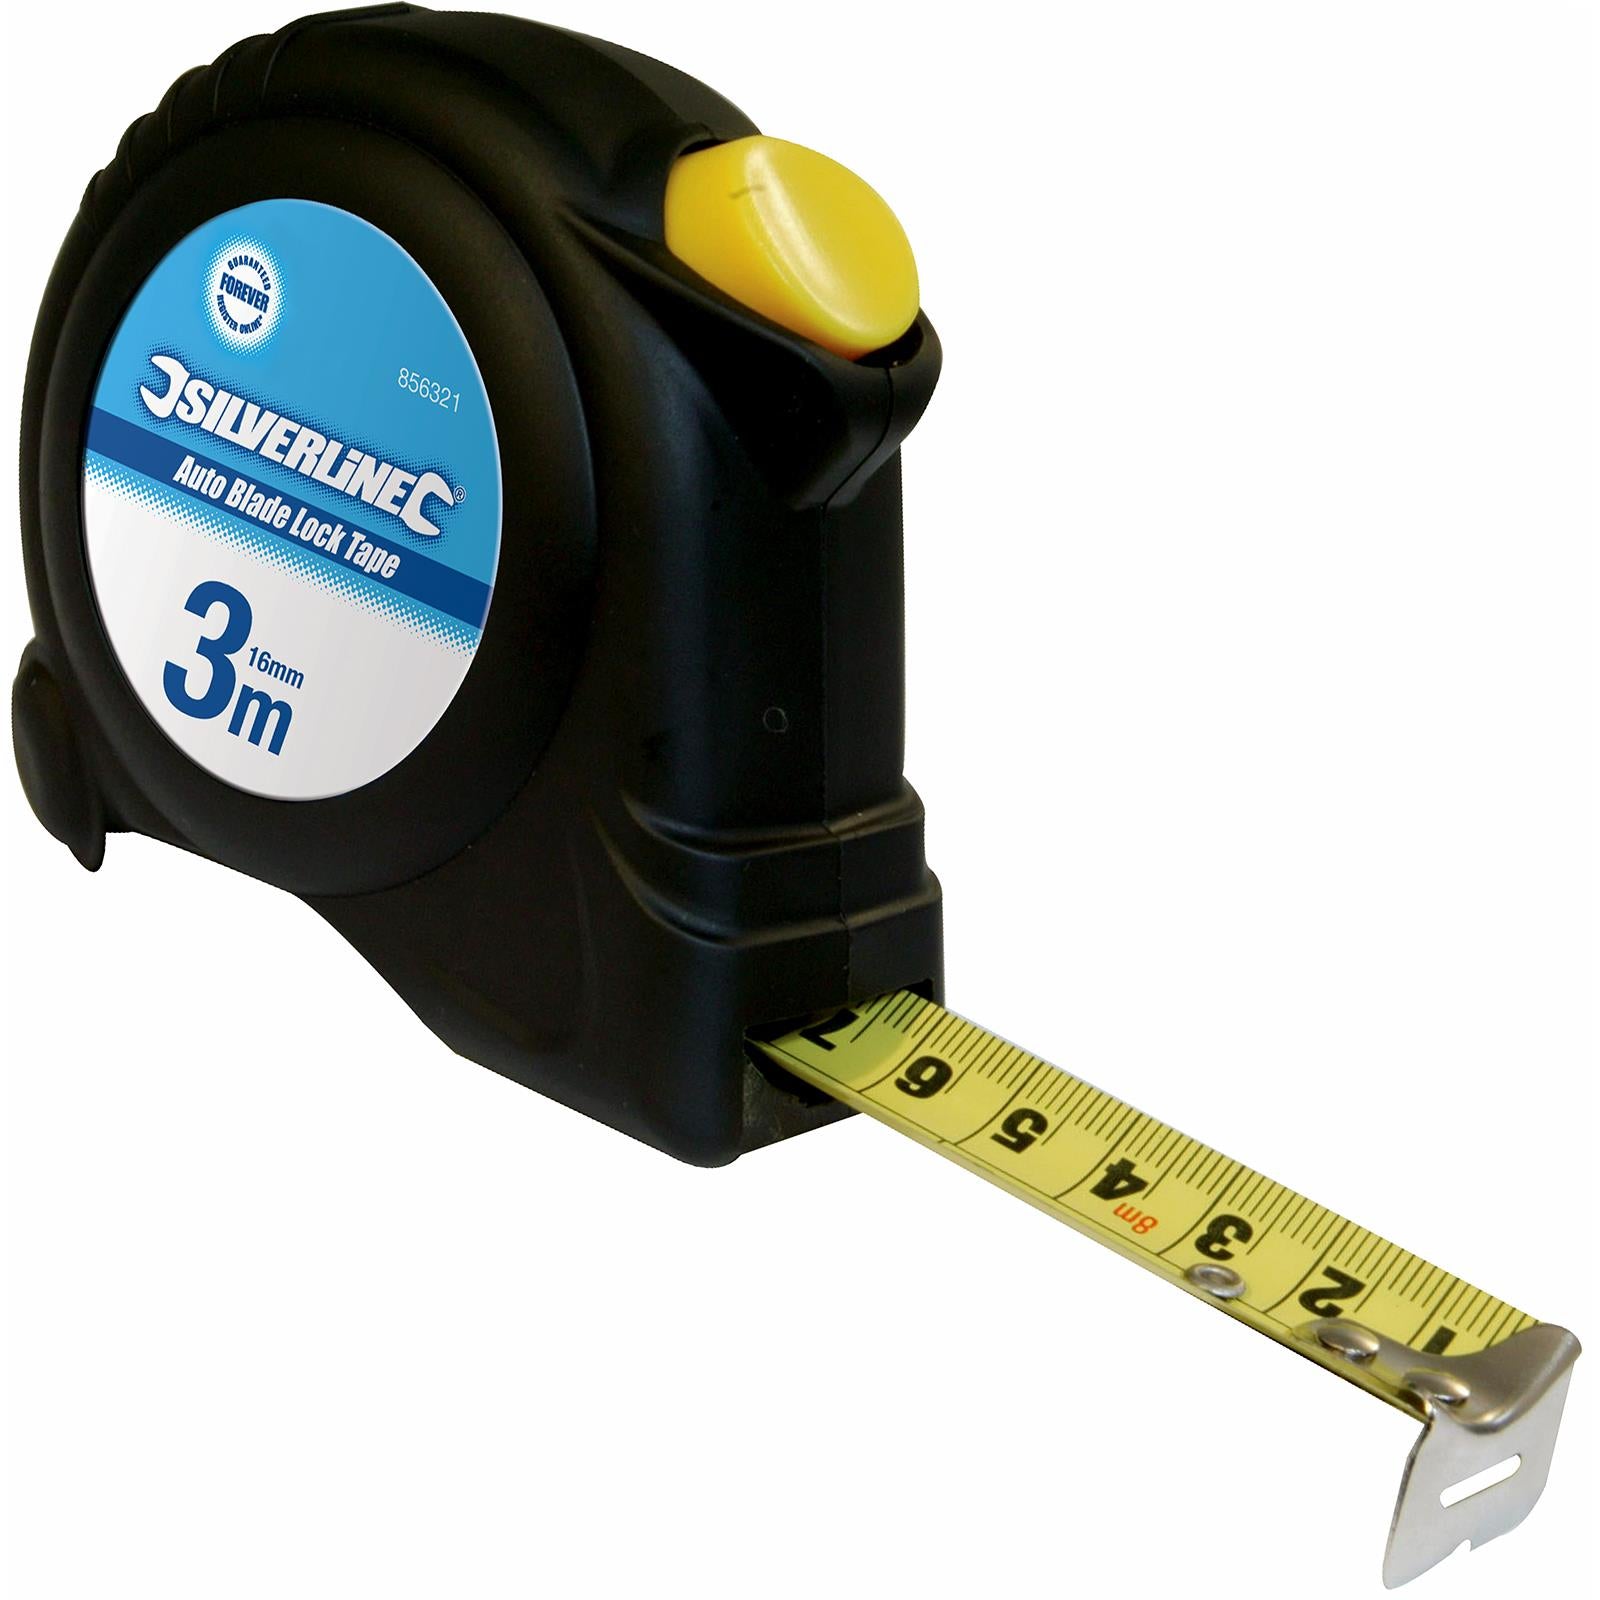 Silverline 3m Tape Measure Automatic Blade Lock Metric Imperial Nylon 16mm